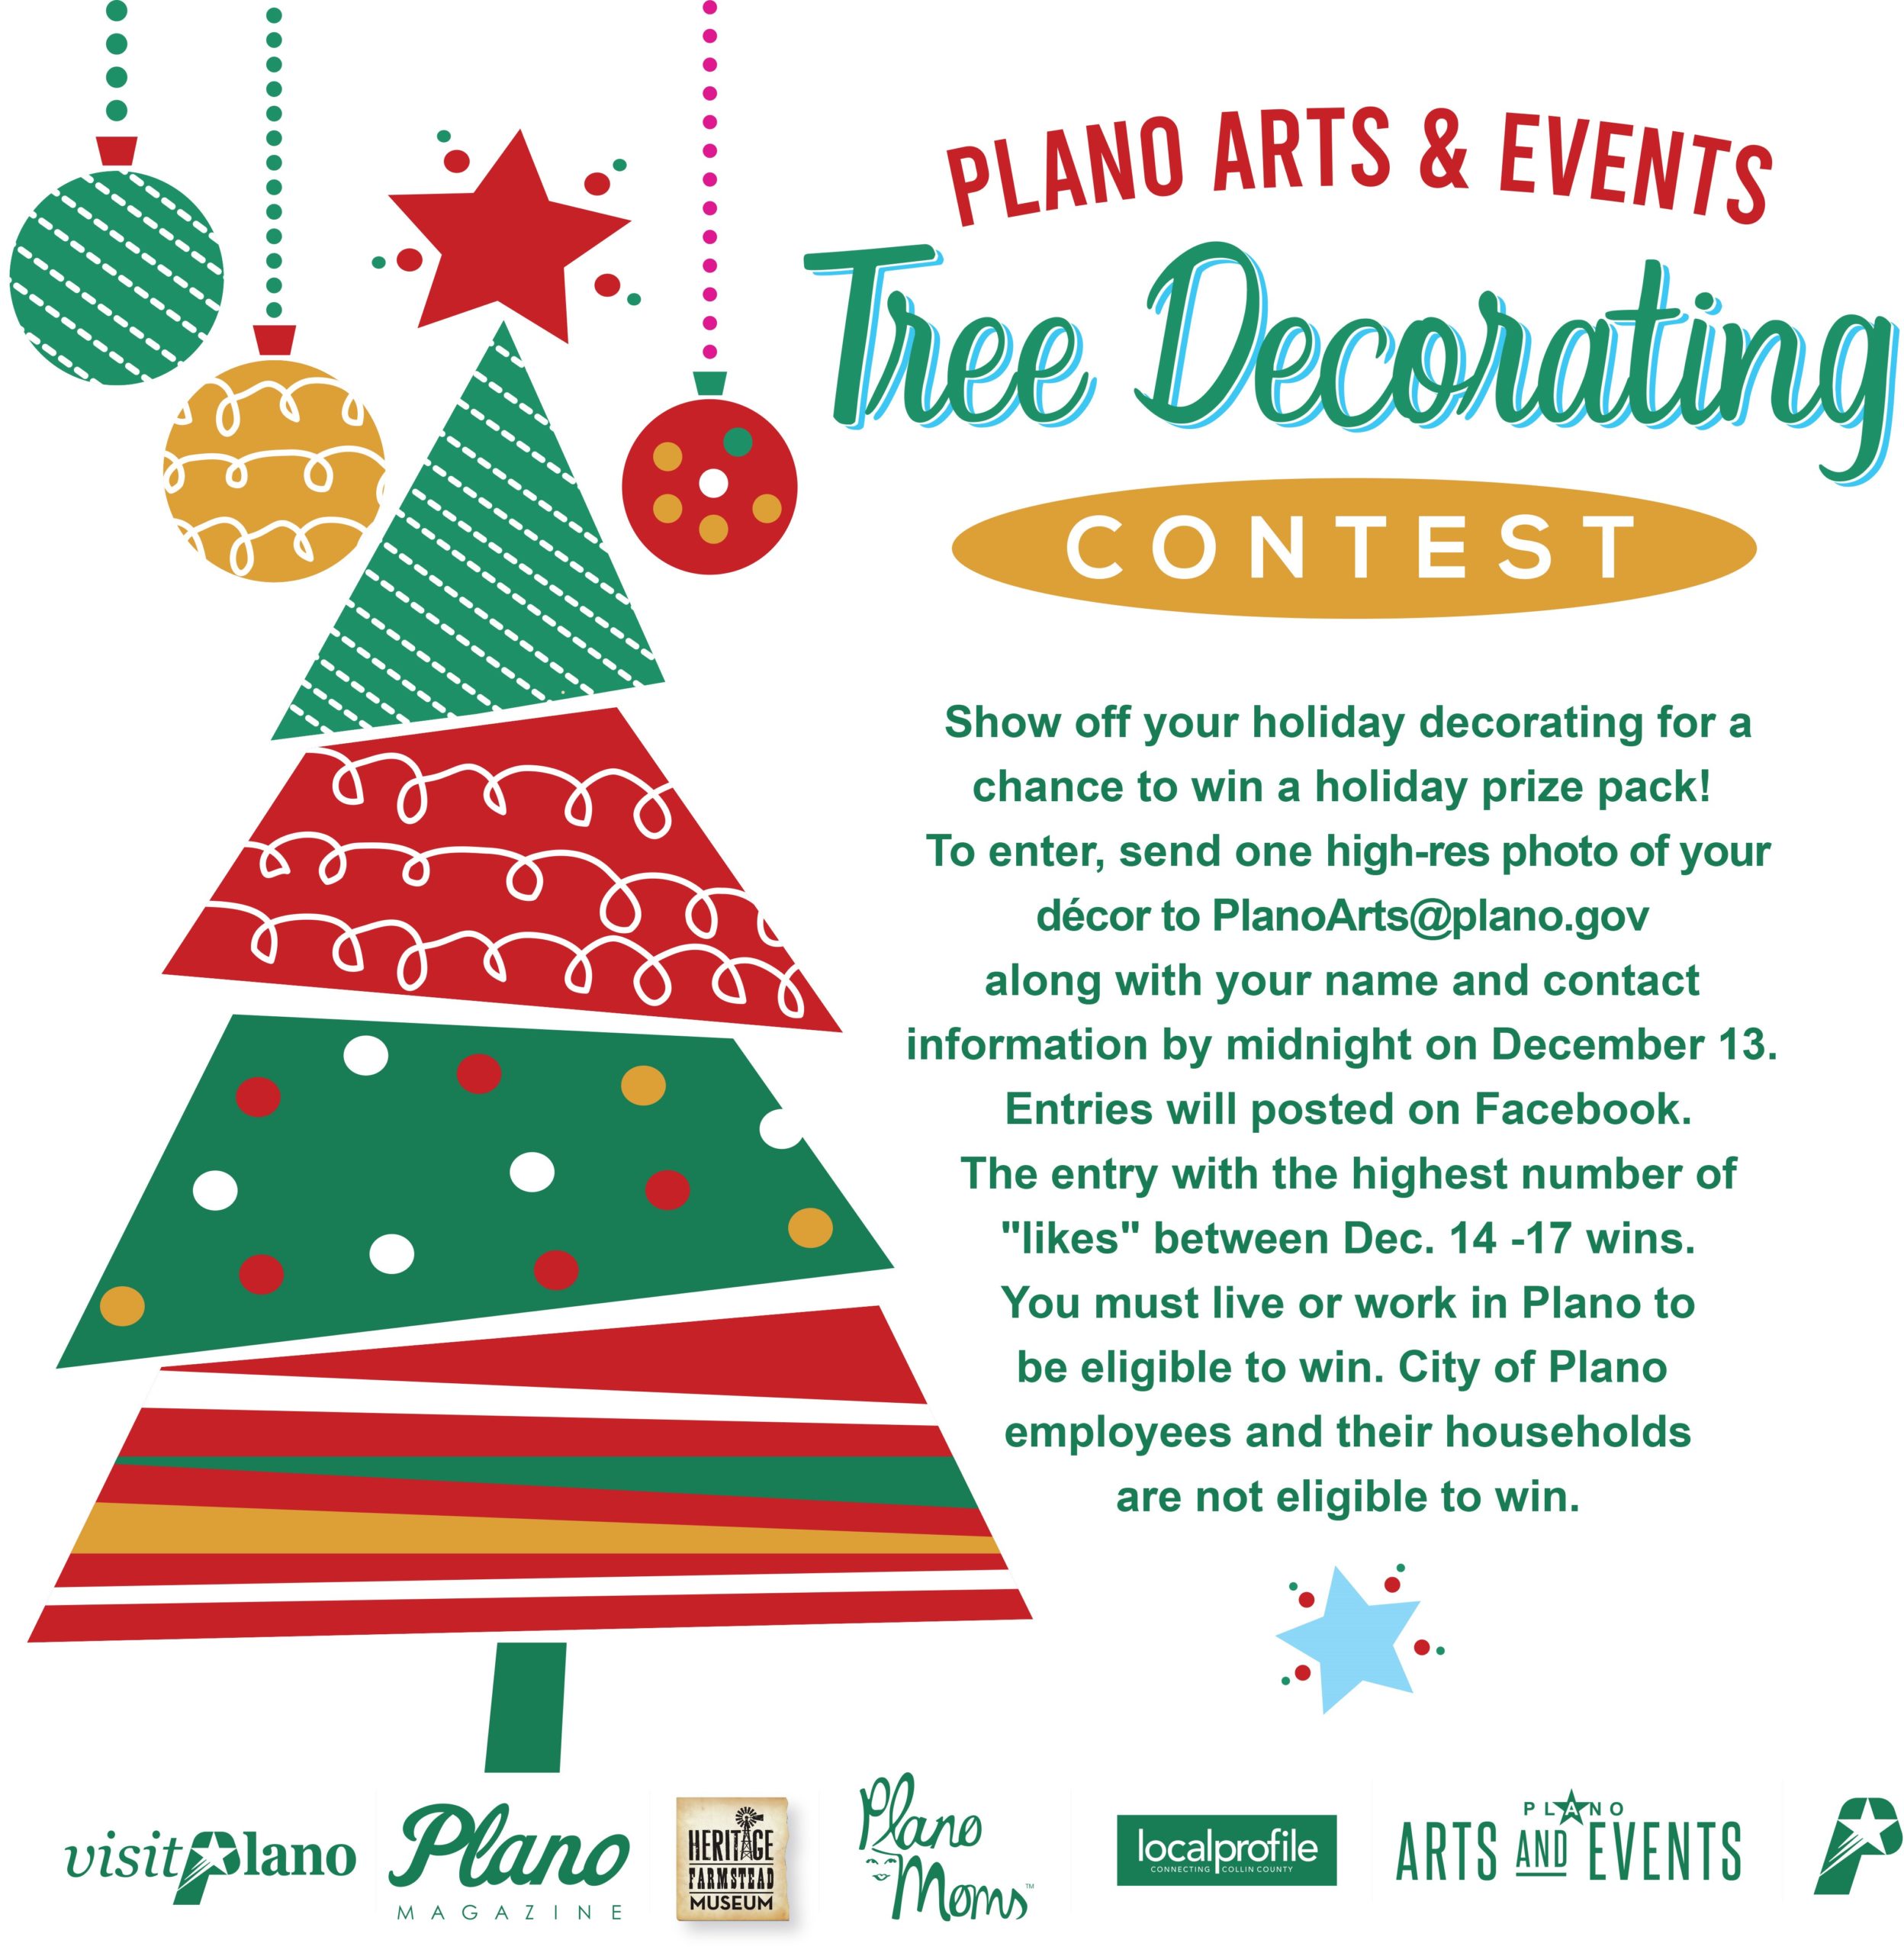 City of Plano tree decorating contest flier